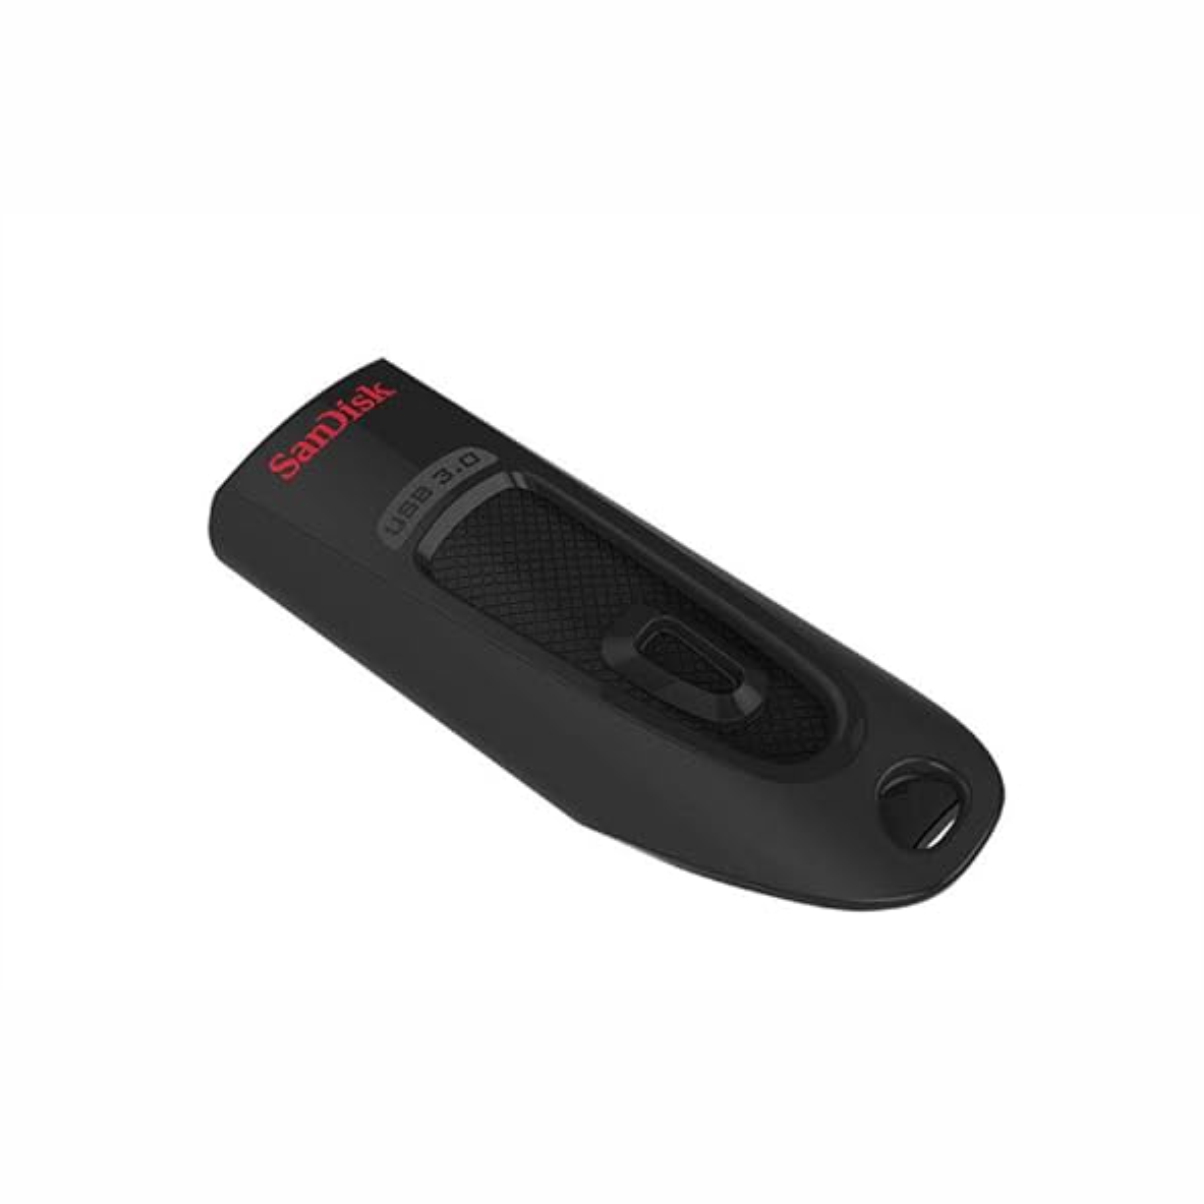 SanDisk Ultra 64 GB USB 3.0 Pen Drive (SDCZ48-064G-135/SDCZ48-064G-UAM46, Black)